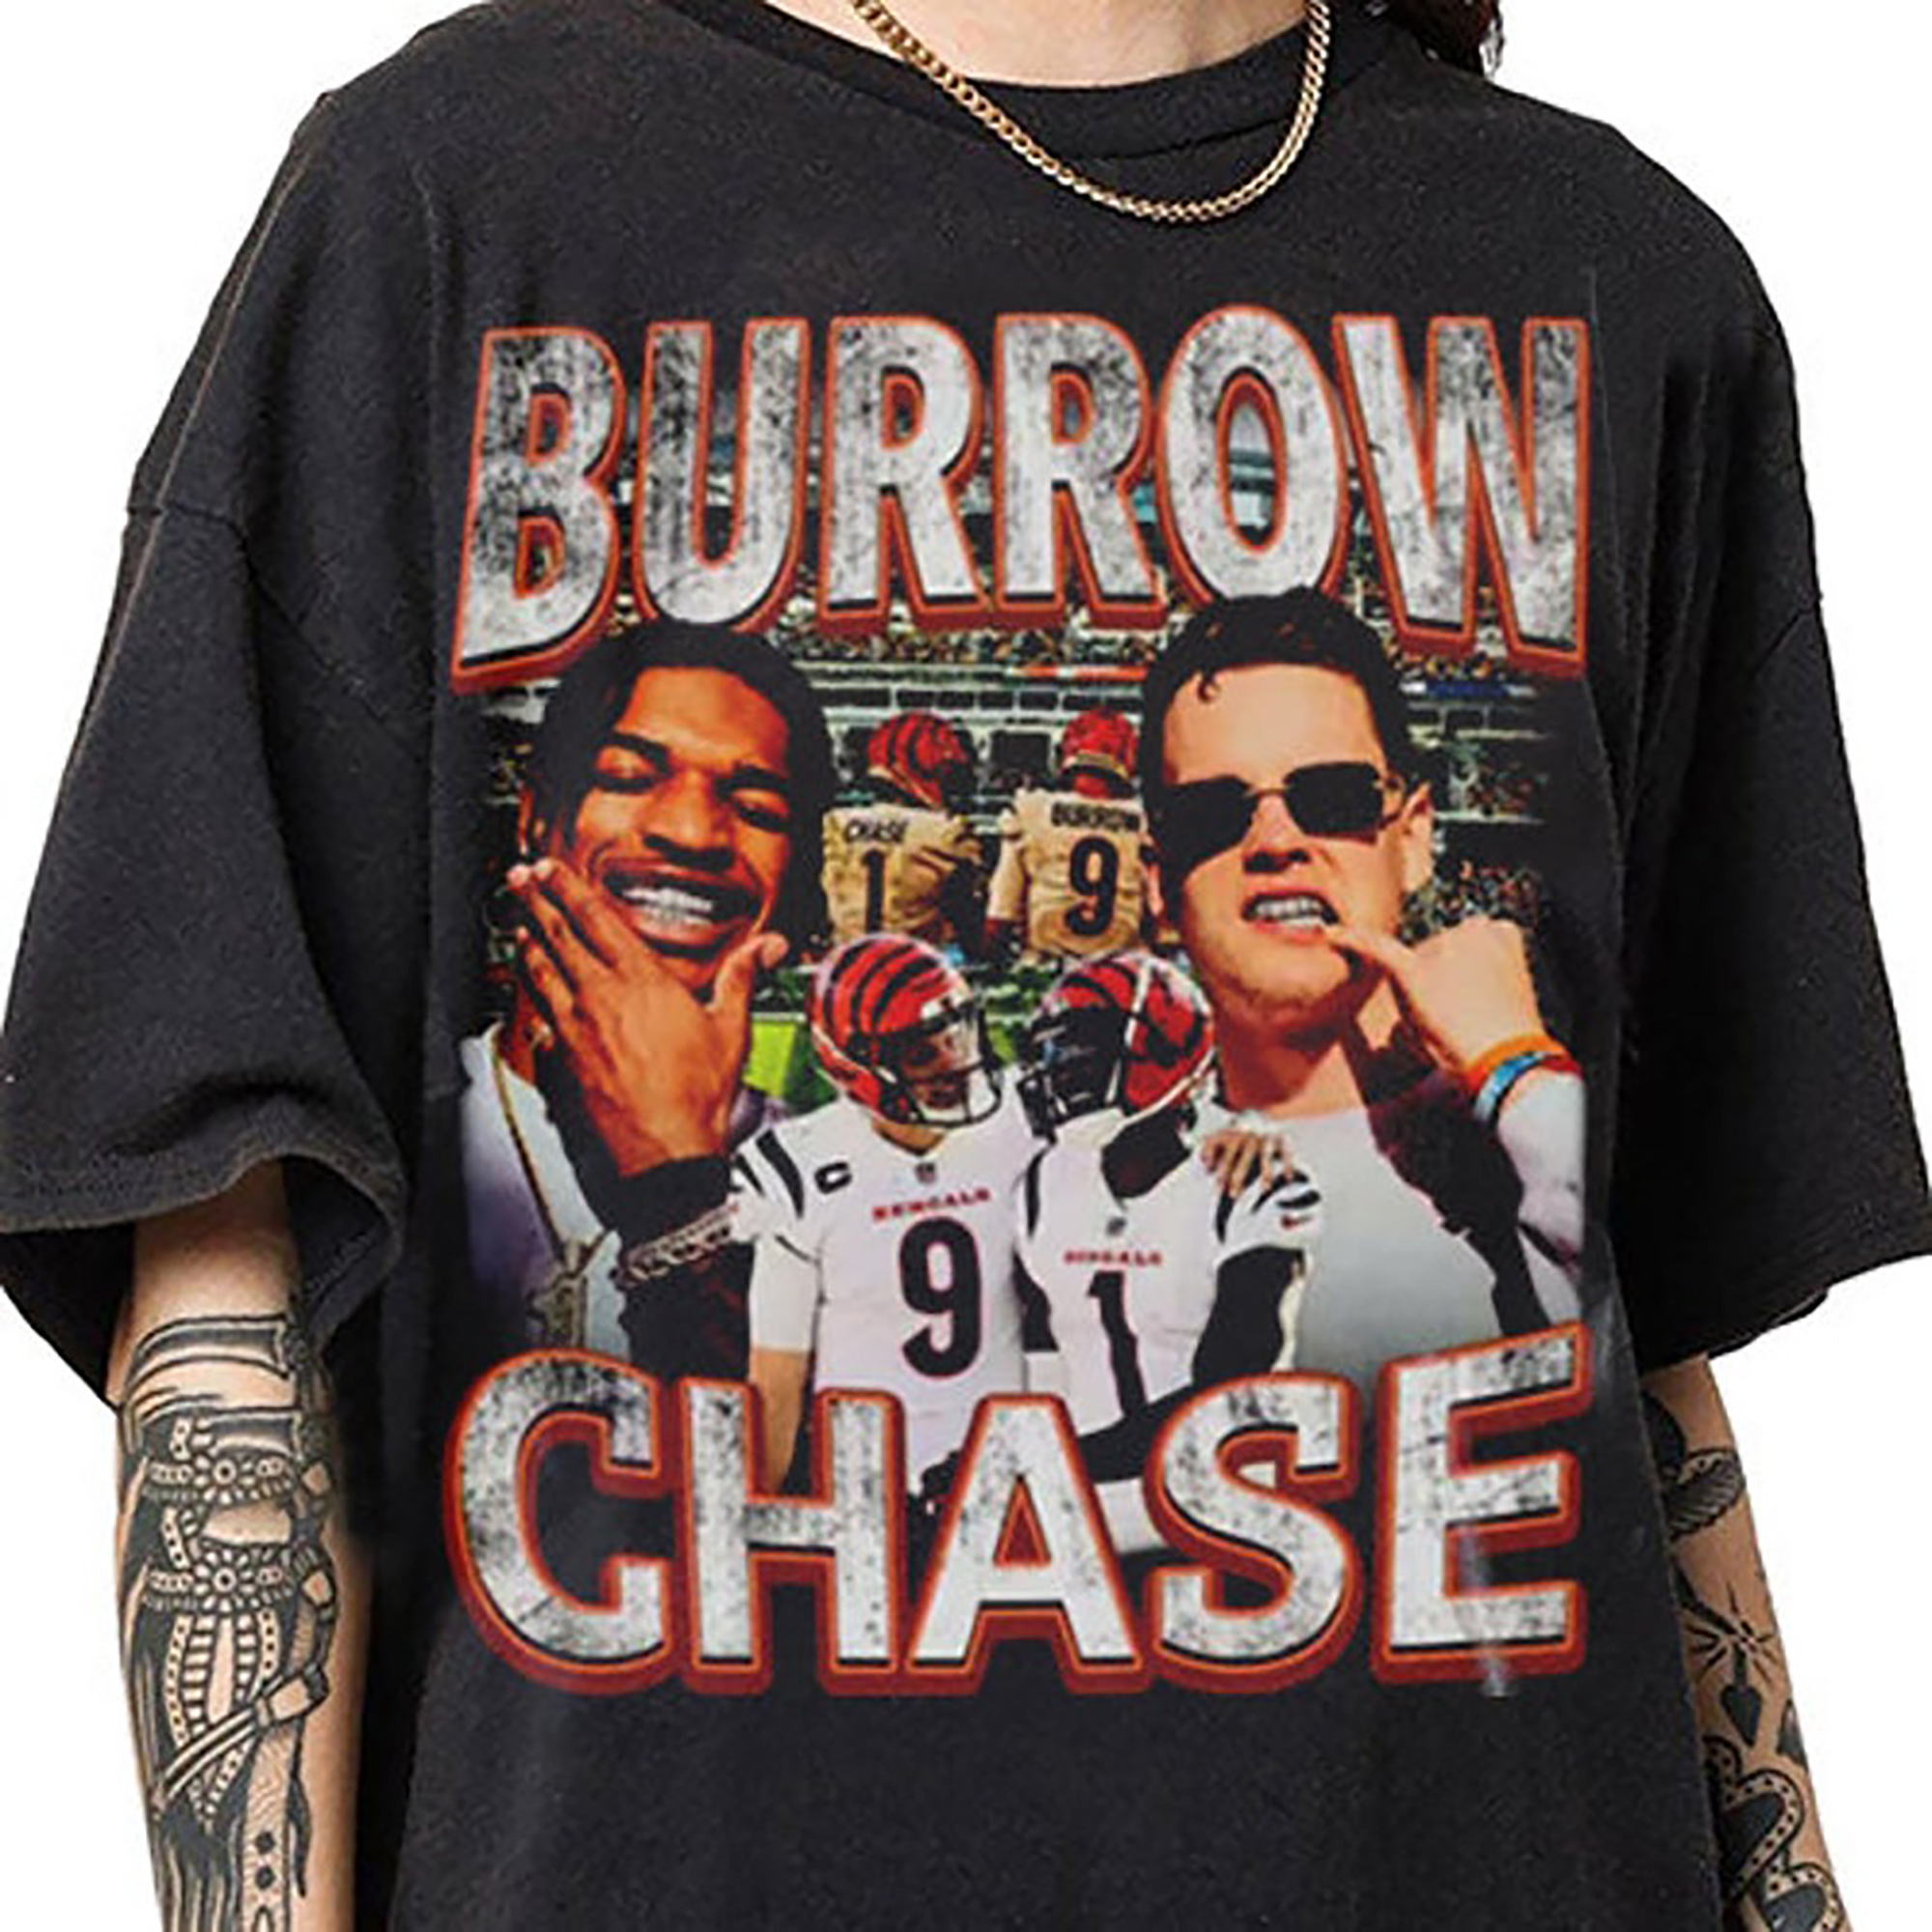 burrow and chase shirt